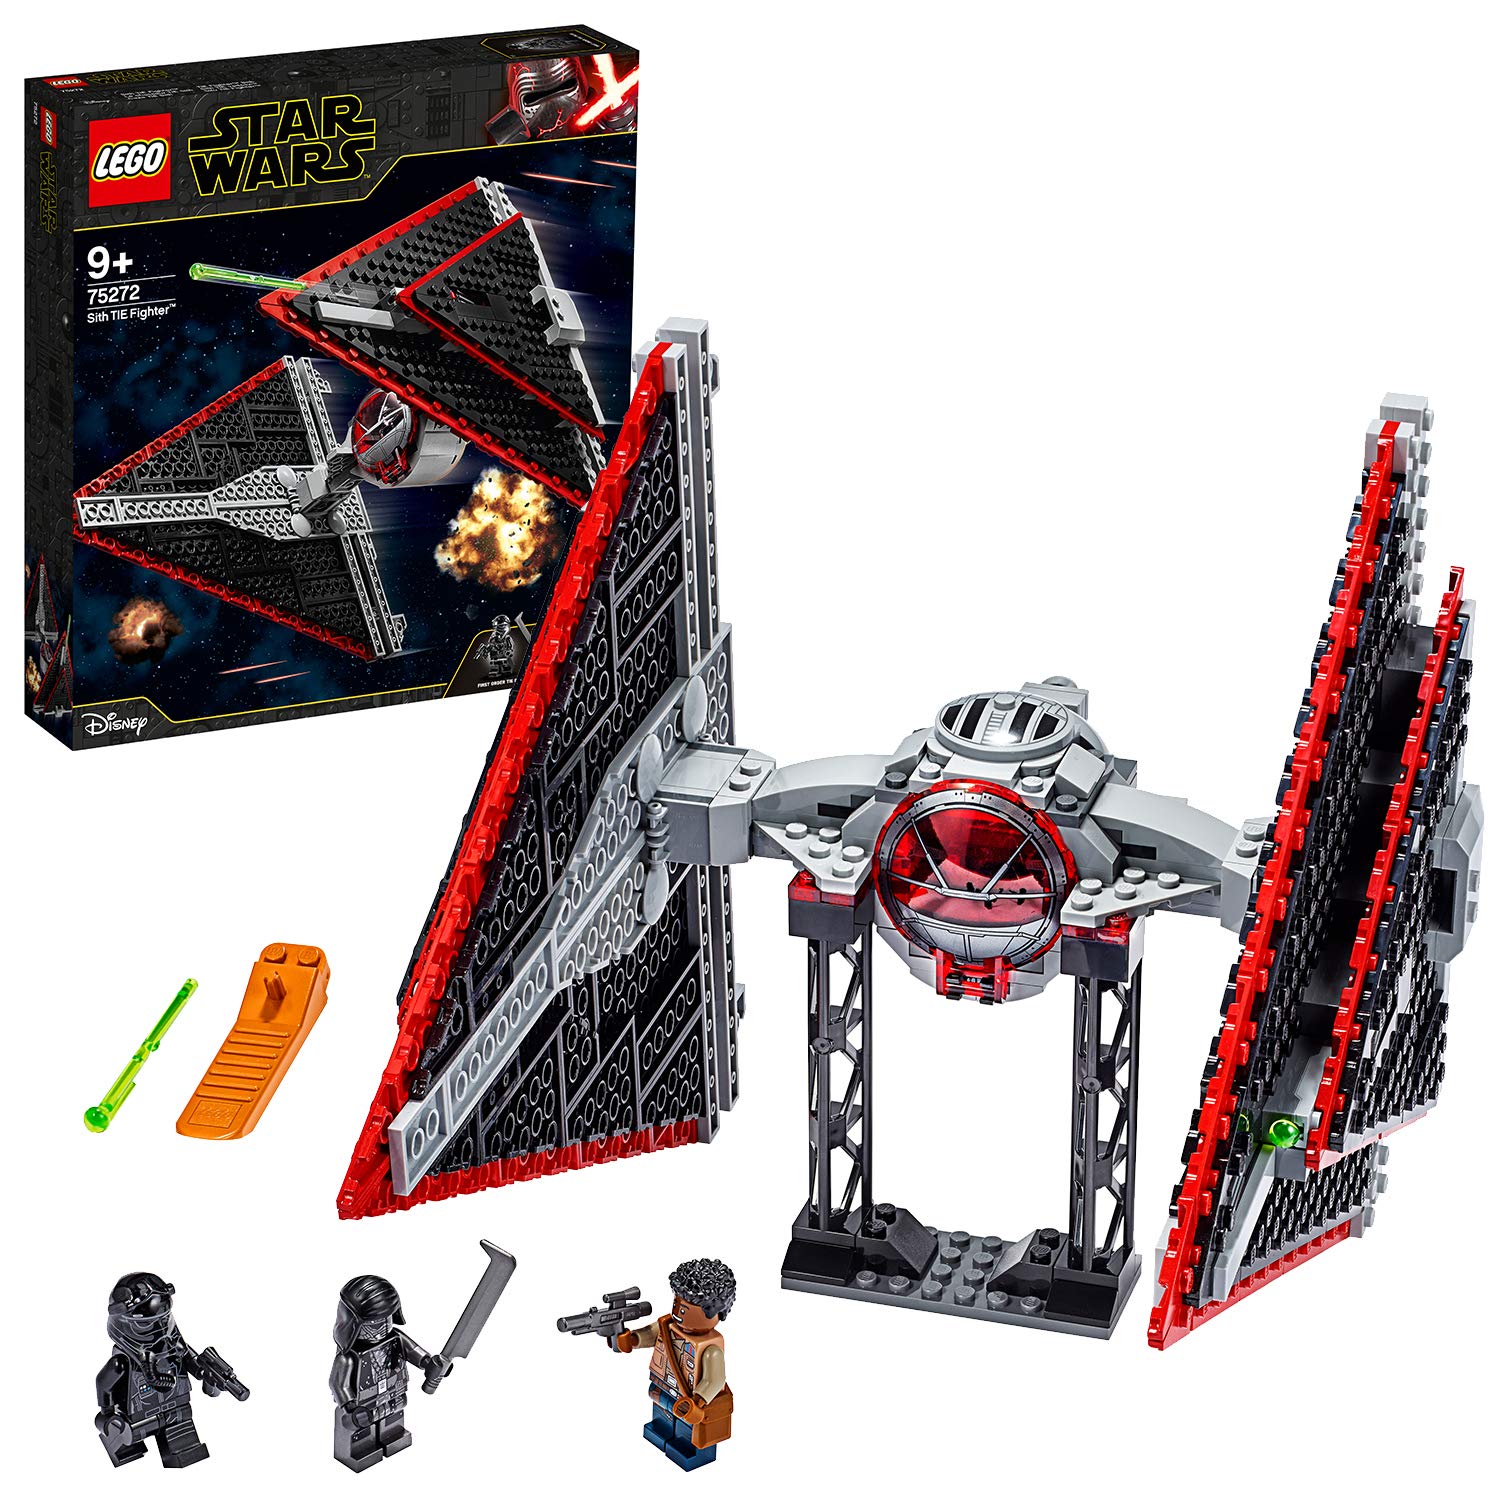 Lego 75272 Sith Tie Fighter, Star Wars, Construction Set